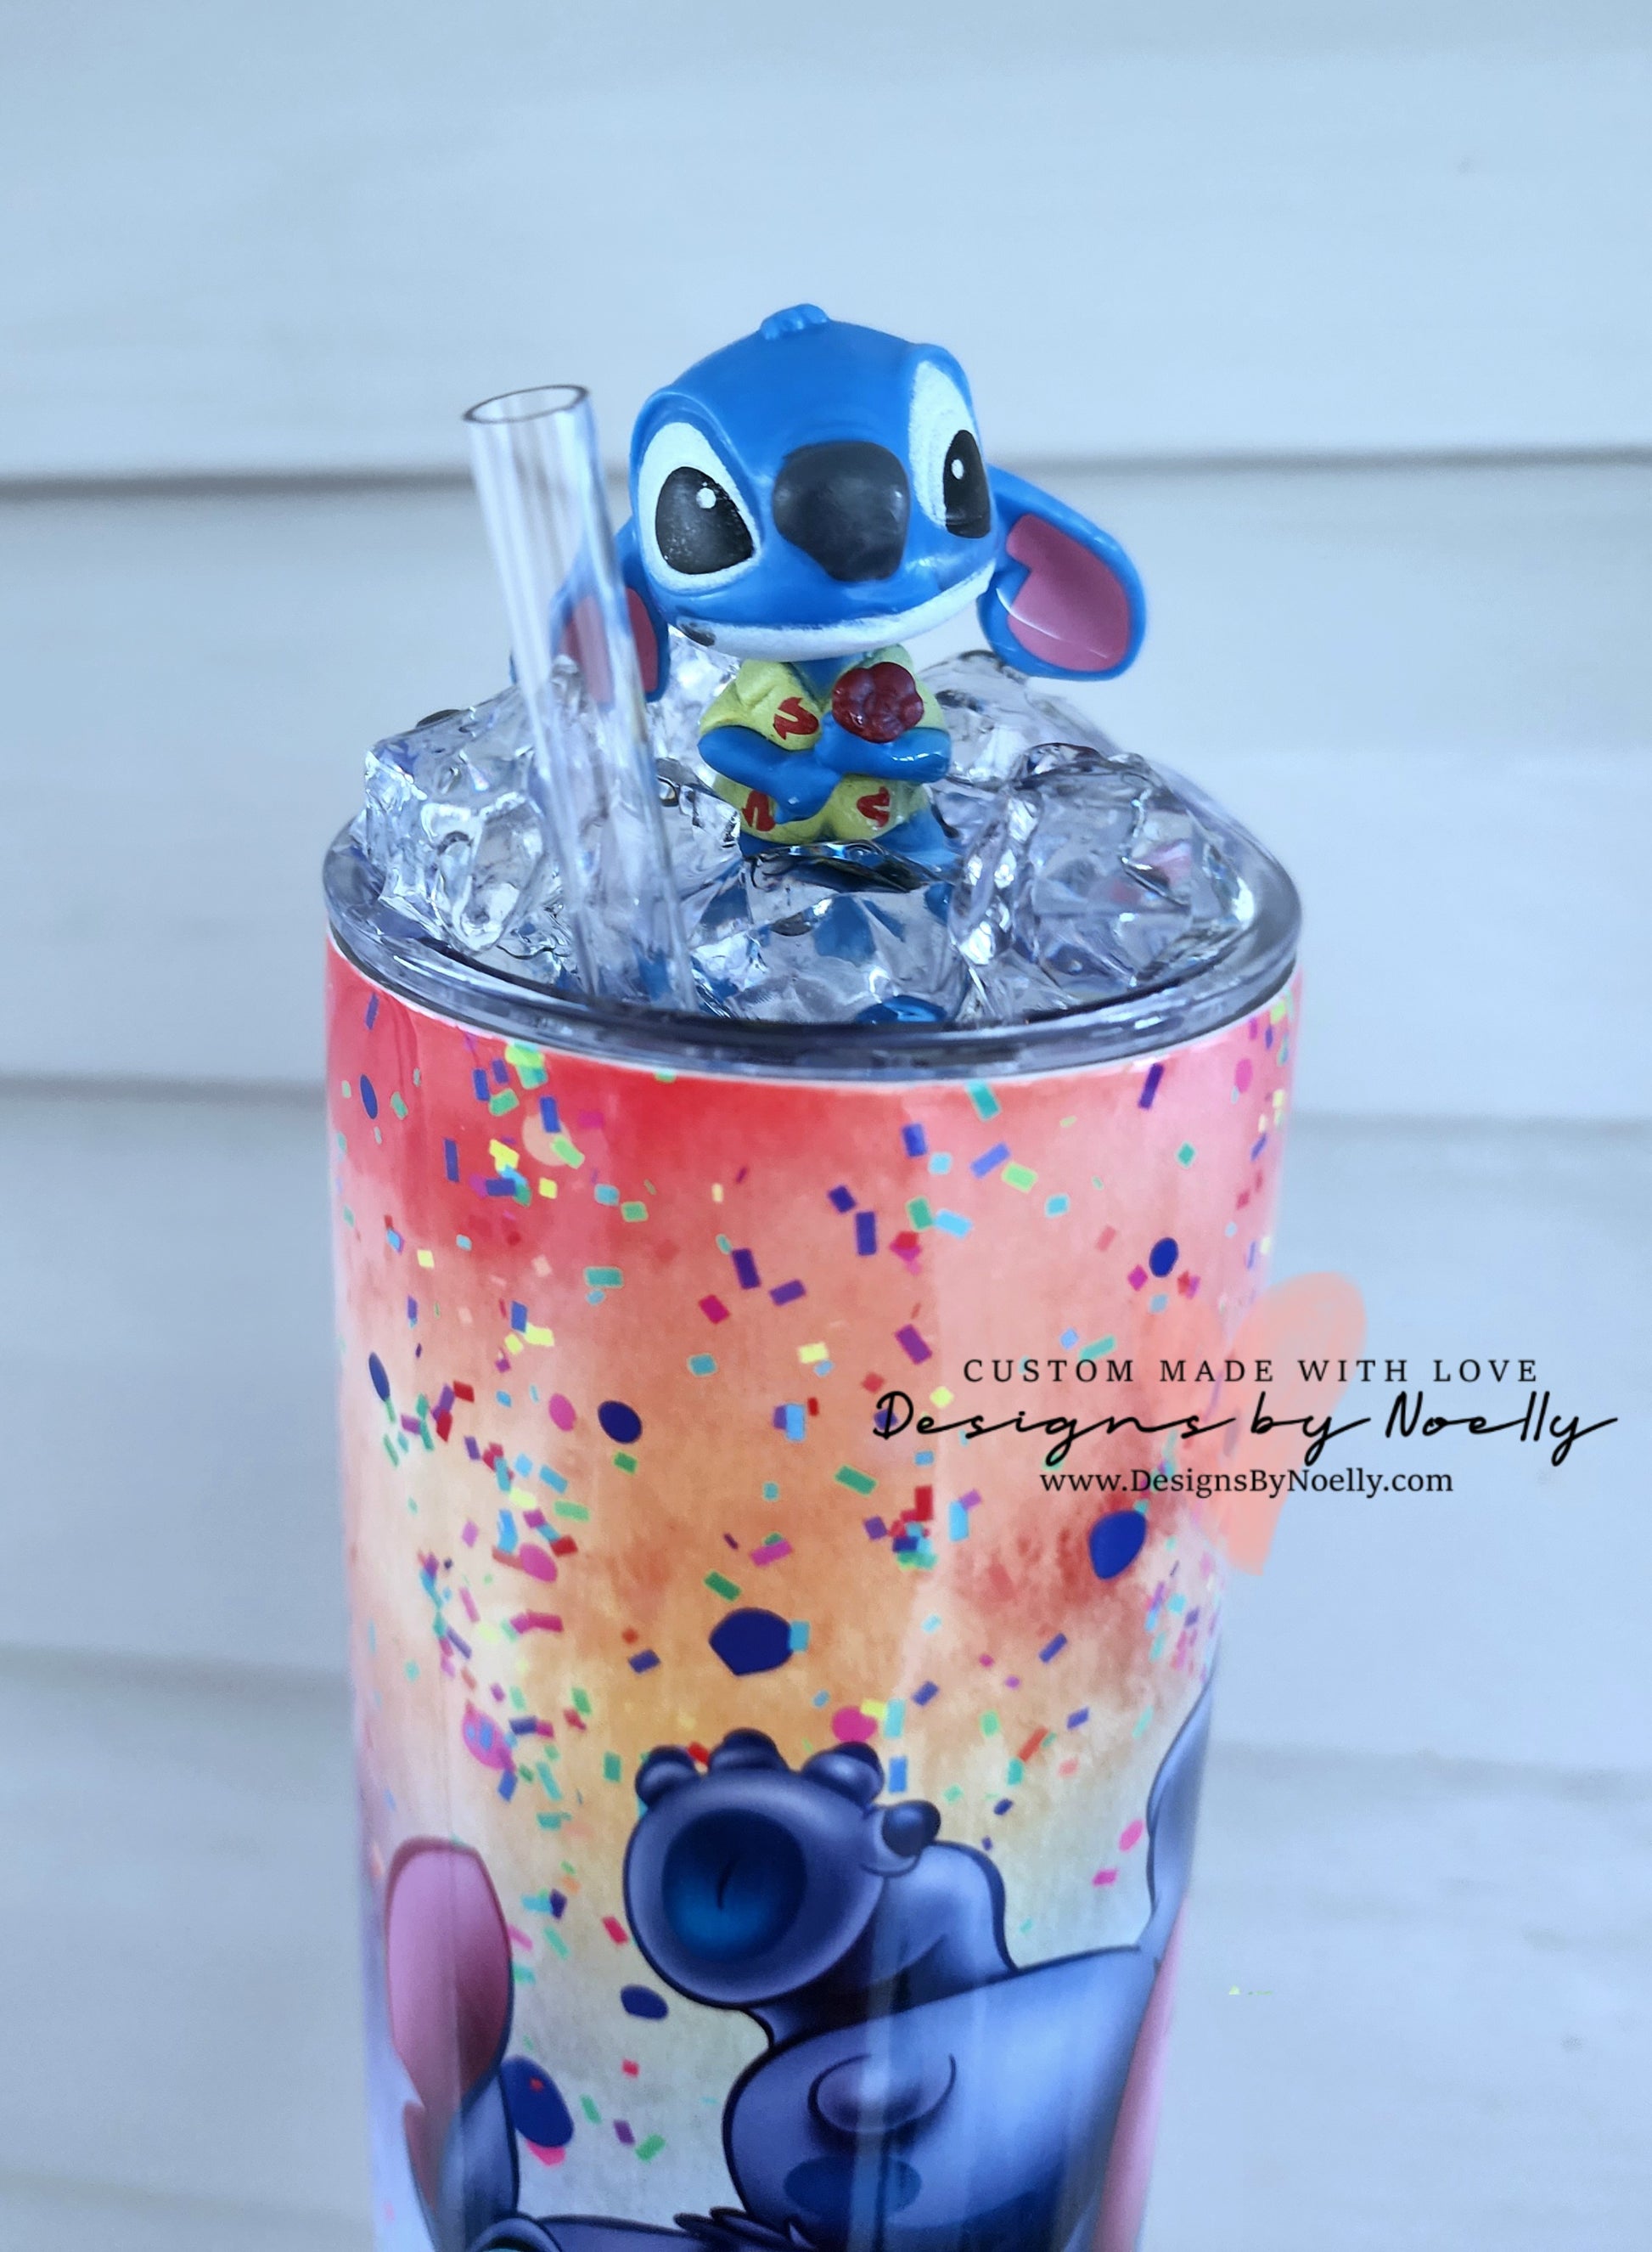 Stitch Inspired Starbucks Cup, Lilo and Stich, Disney 